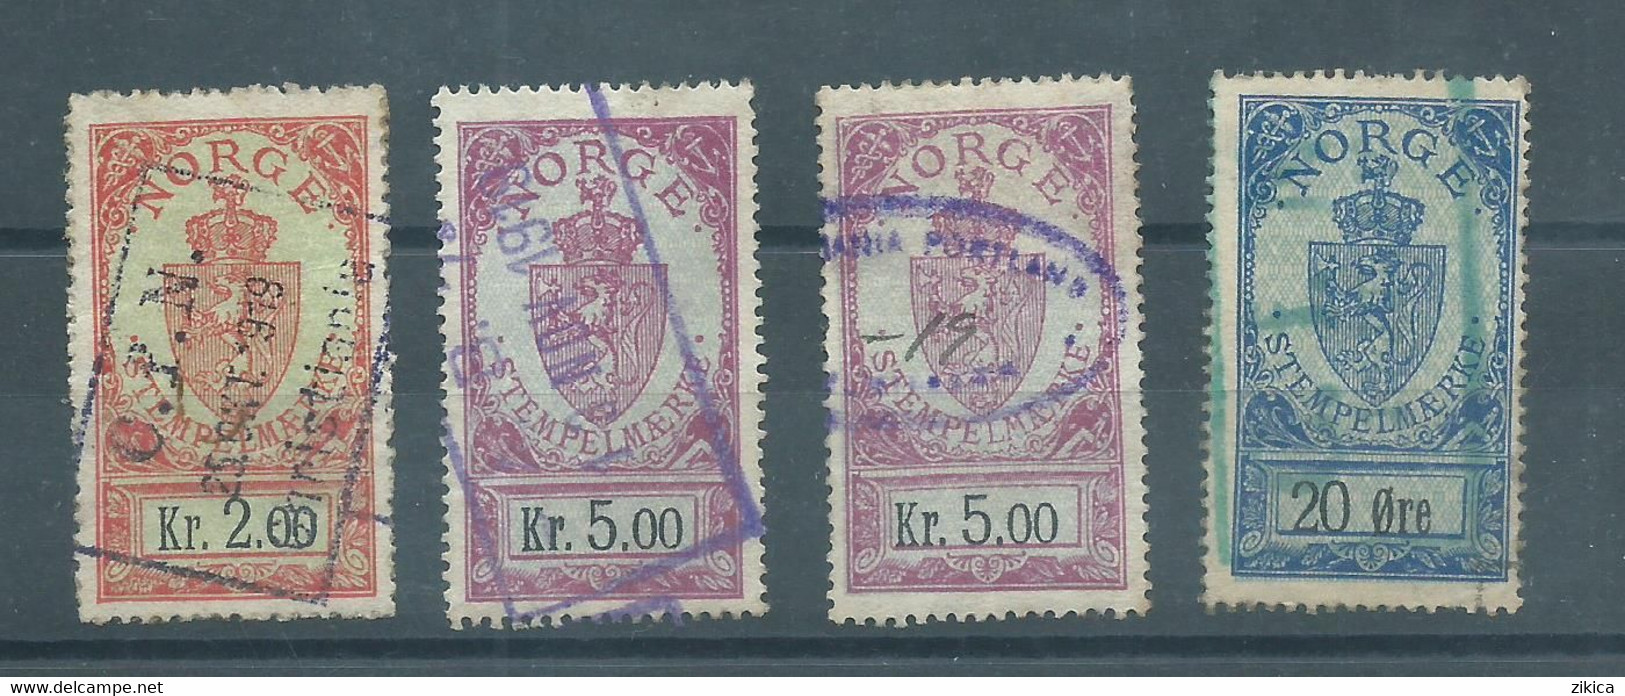 LOT 4 Stamps - NORWAY Norwegen Stempelmarke Documentary Stamps - Revenue Stamps